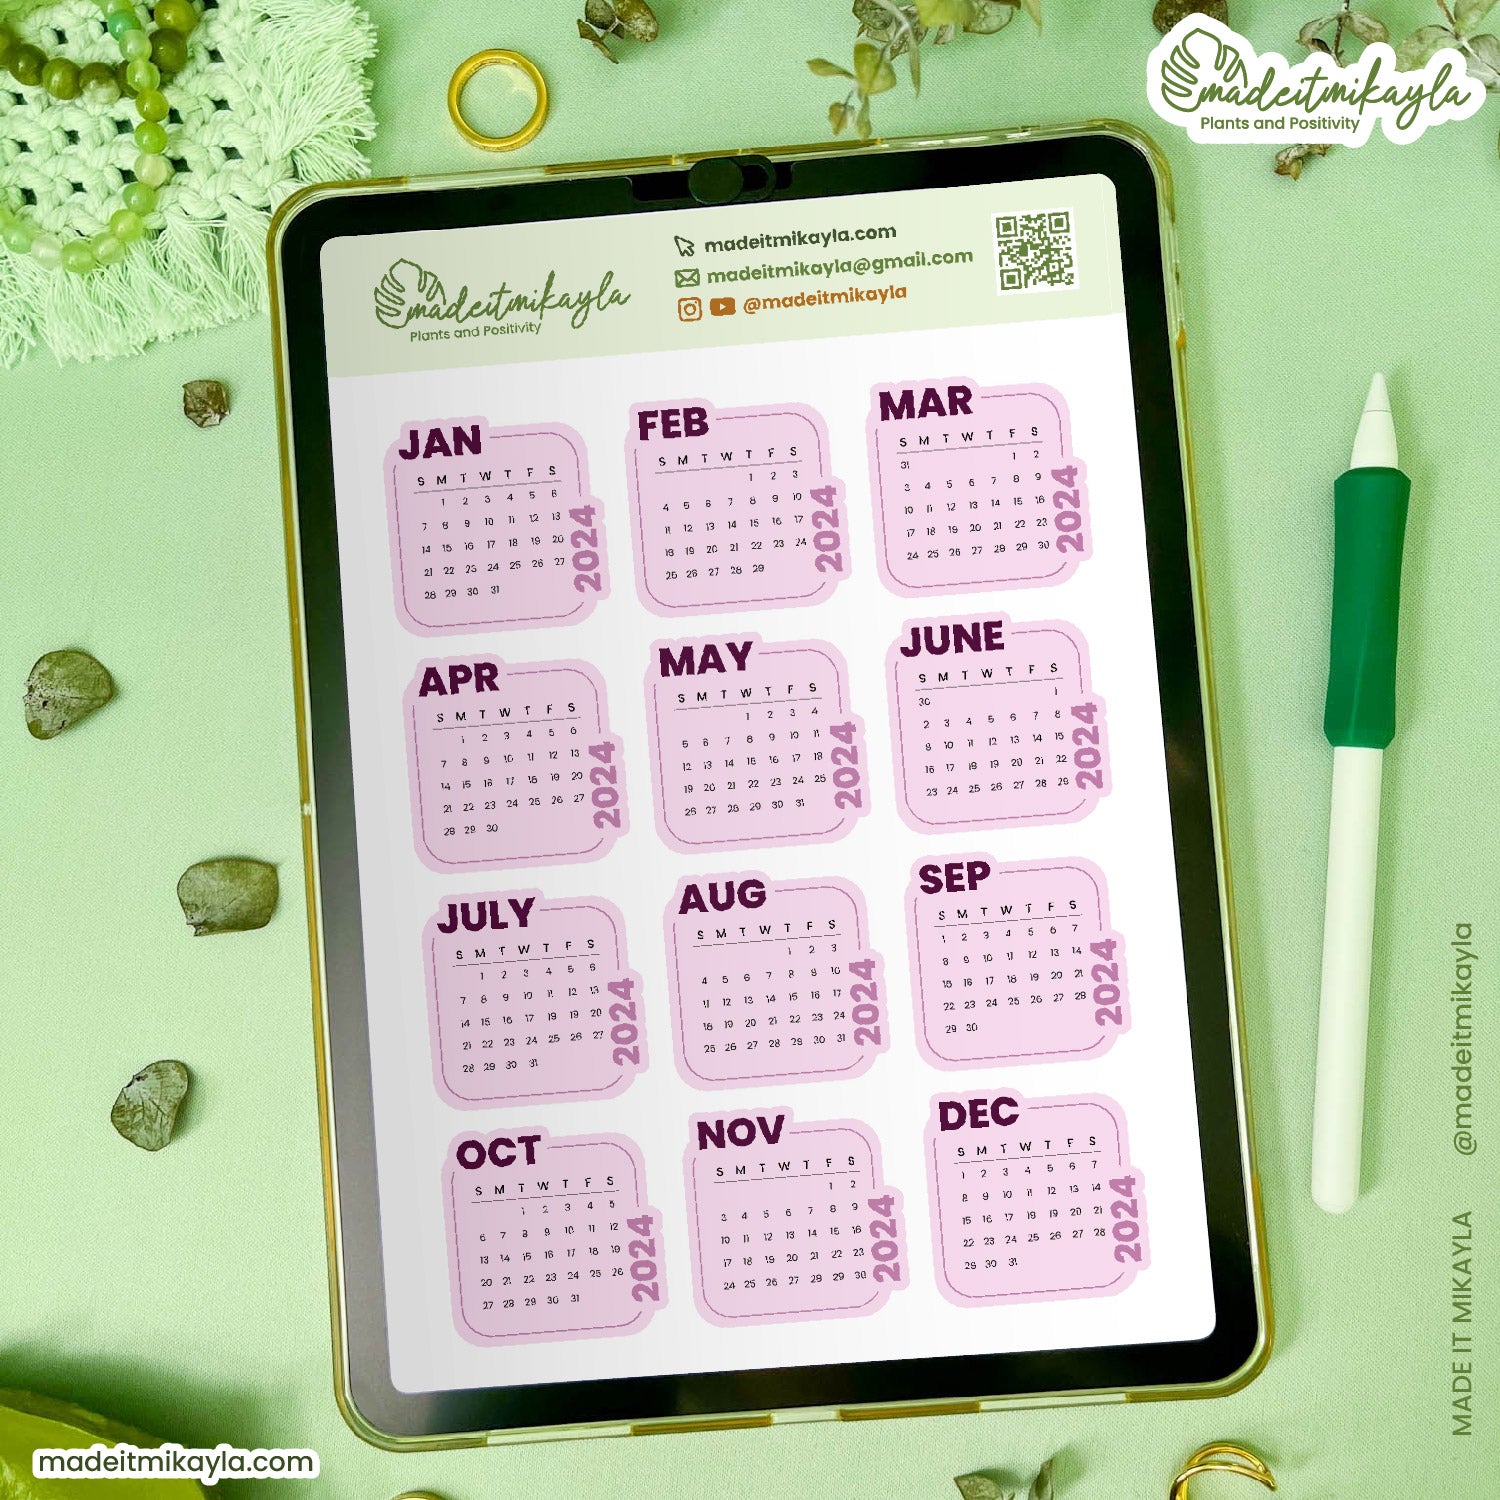 Pink 2024 Calendars Digital Stickers | MadeItMikayla